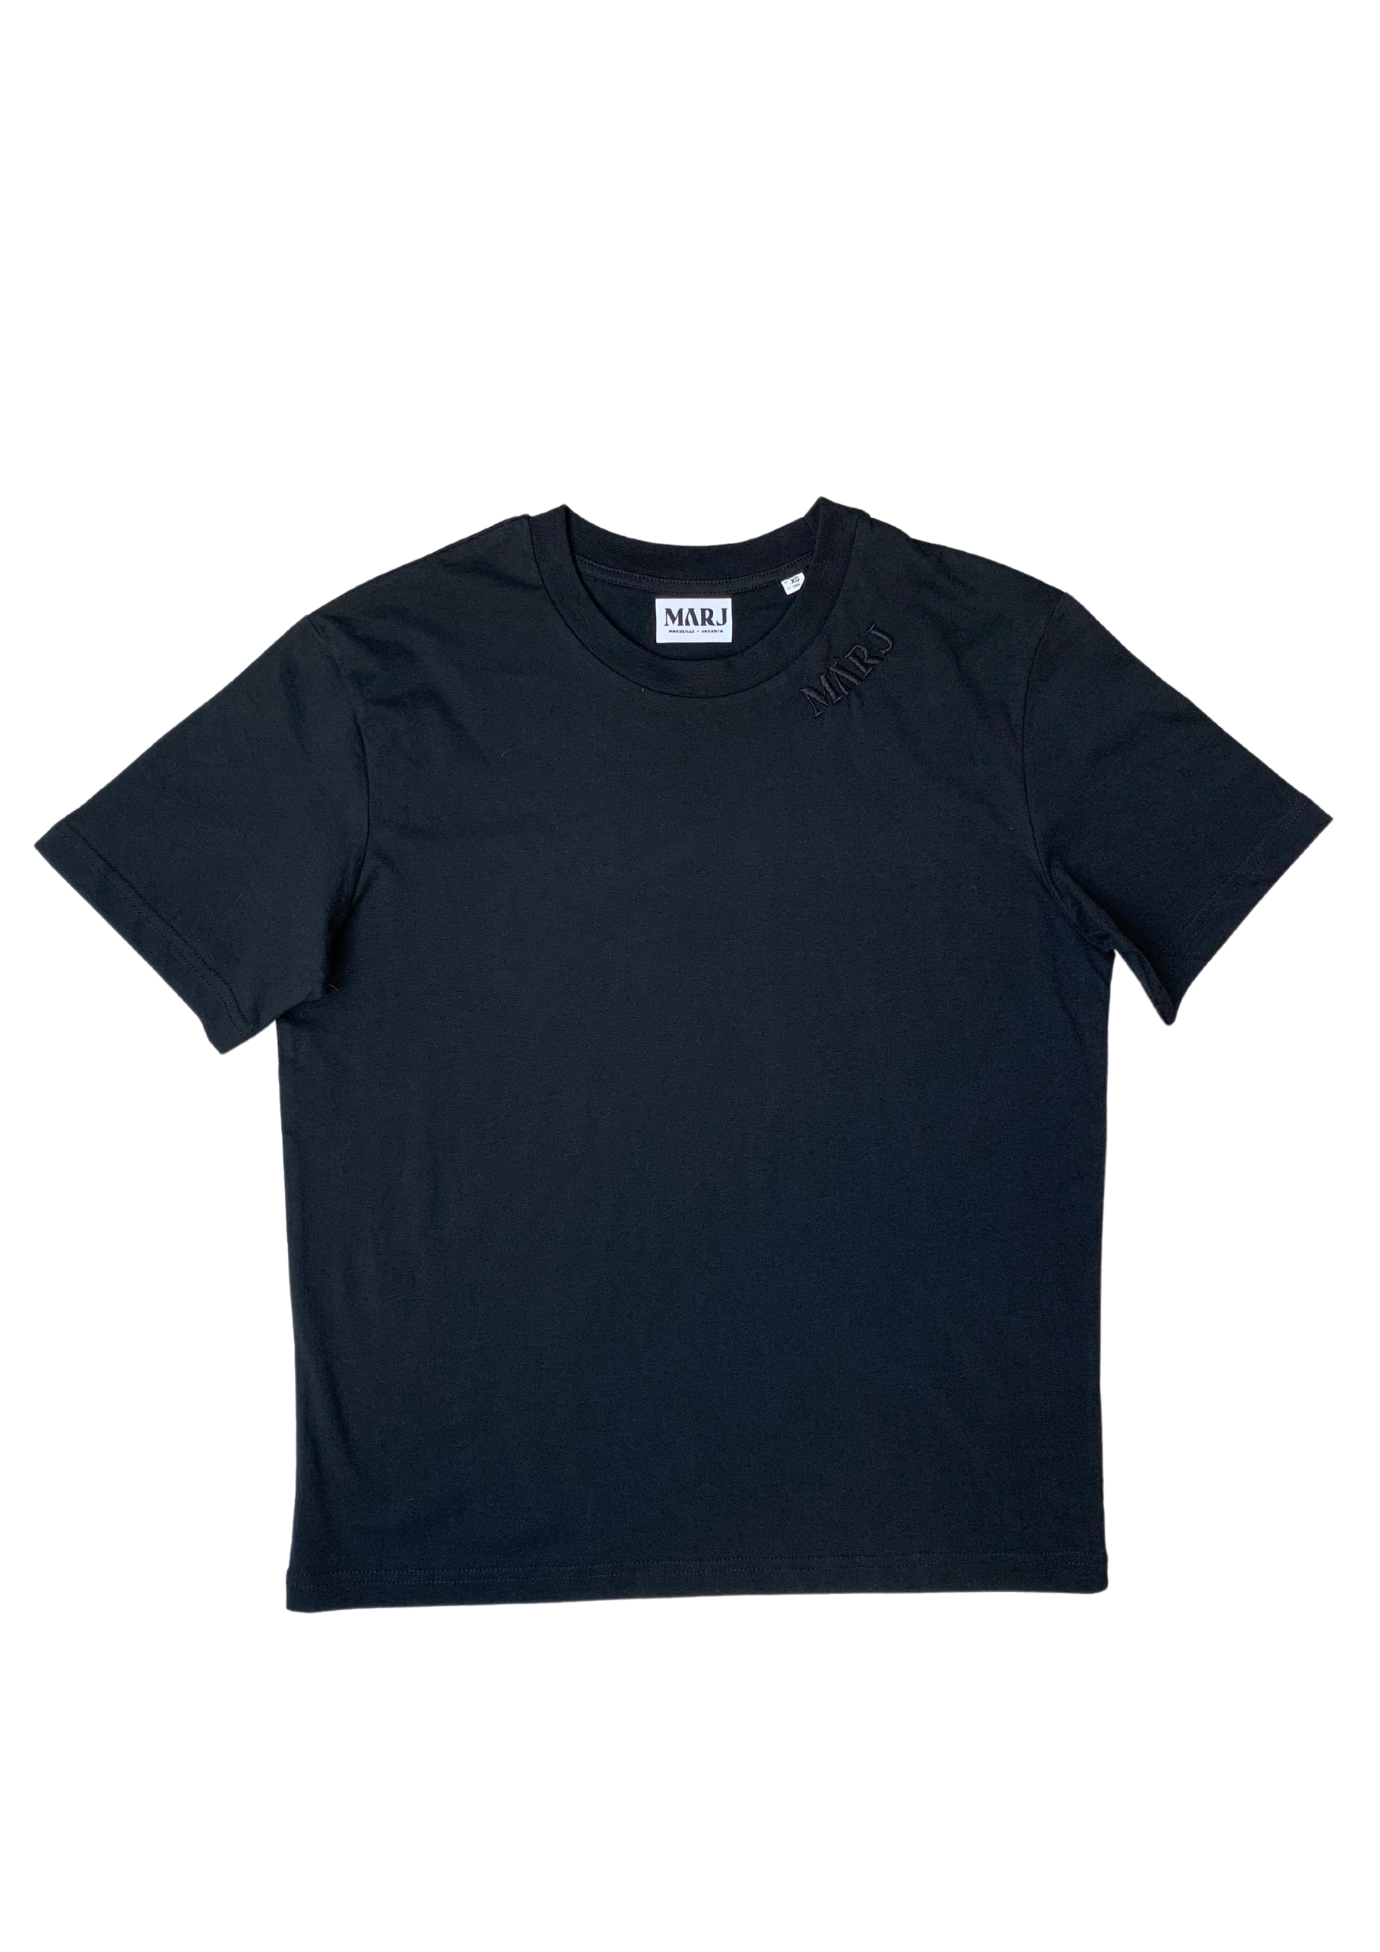 MARJ sustainable fashion black T shirt embroidery steerwear